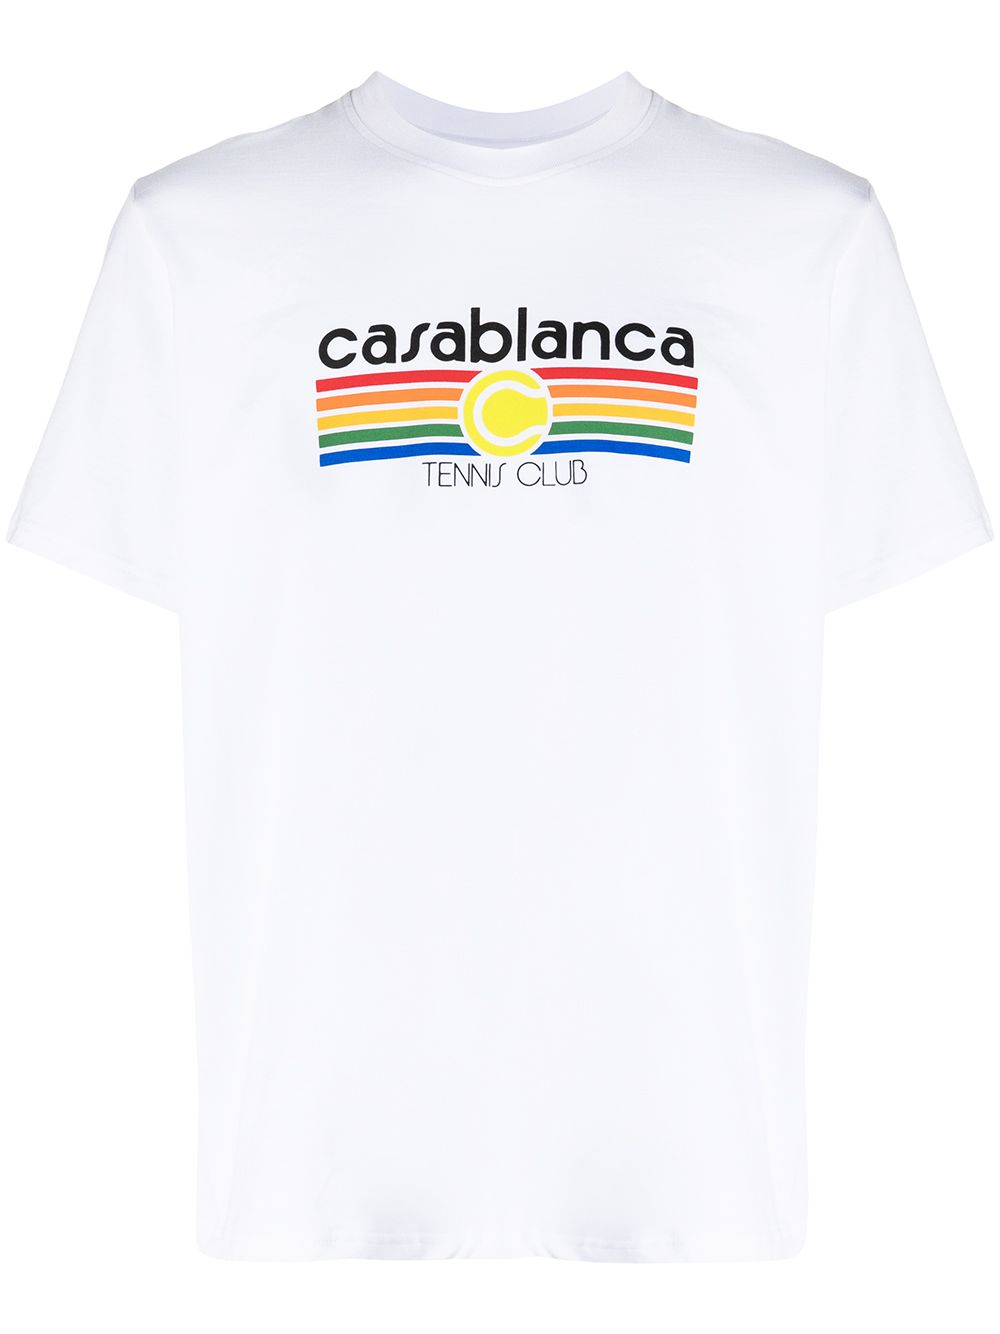 фото Casablanca футболка tennis club с полосками